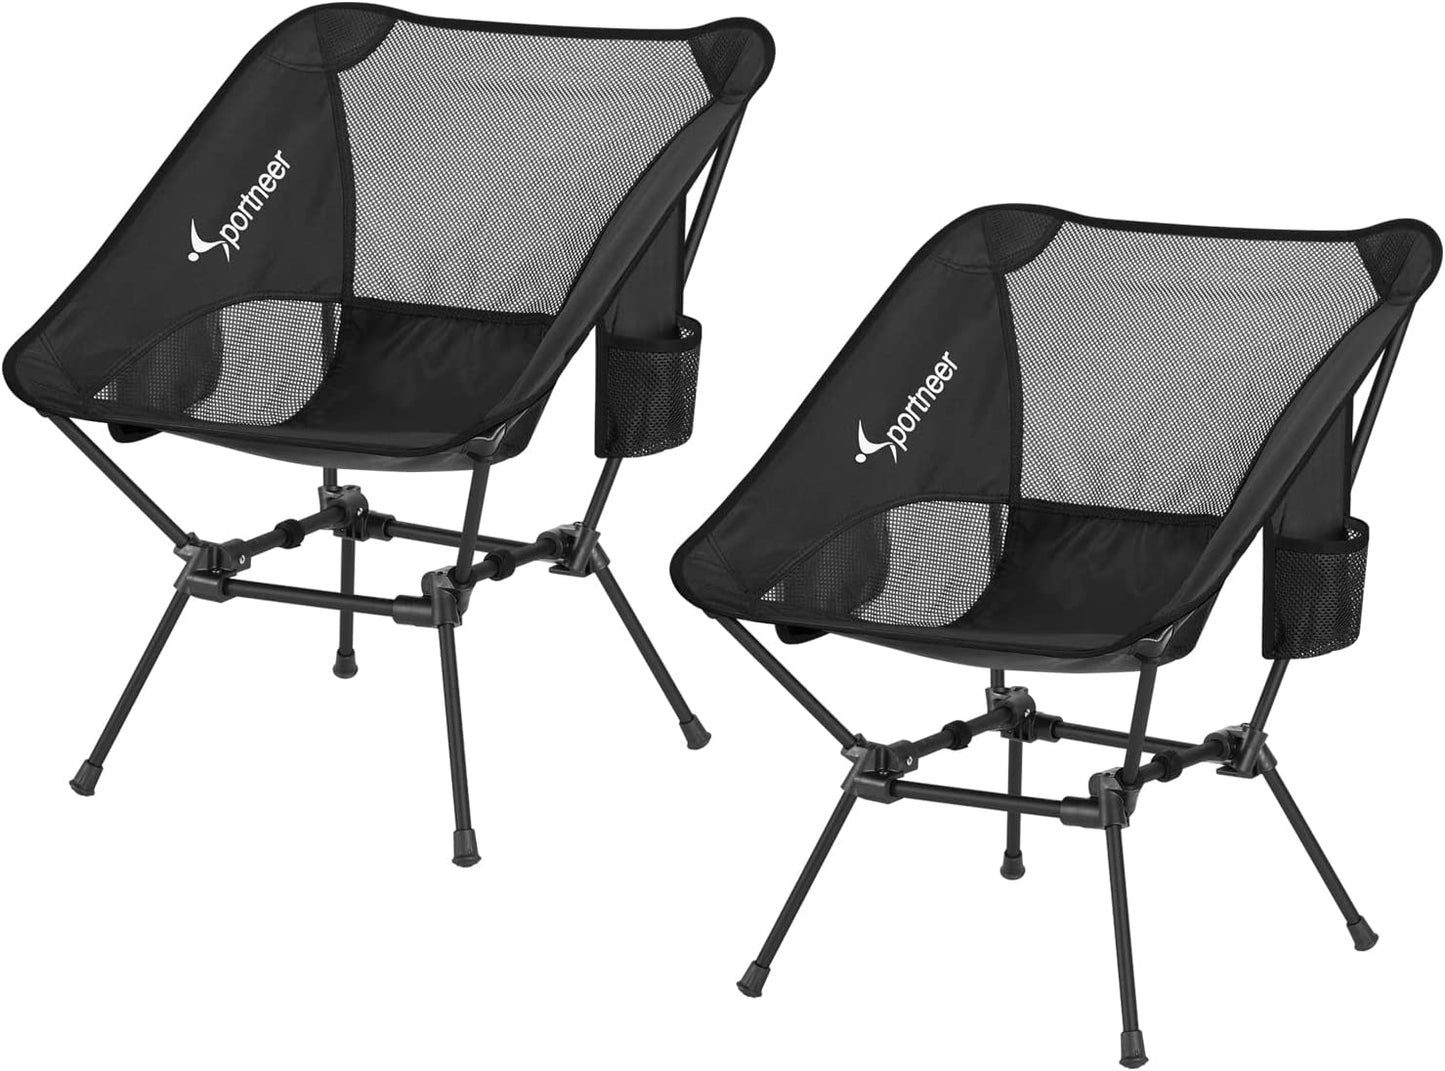 Sportneer Lightweight Portable Folding Camping Chair